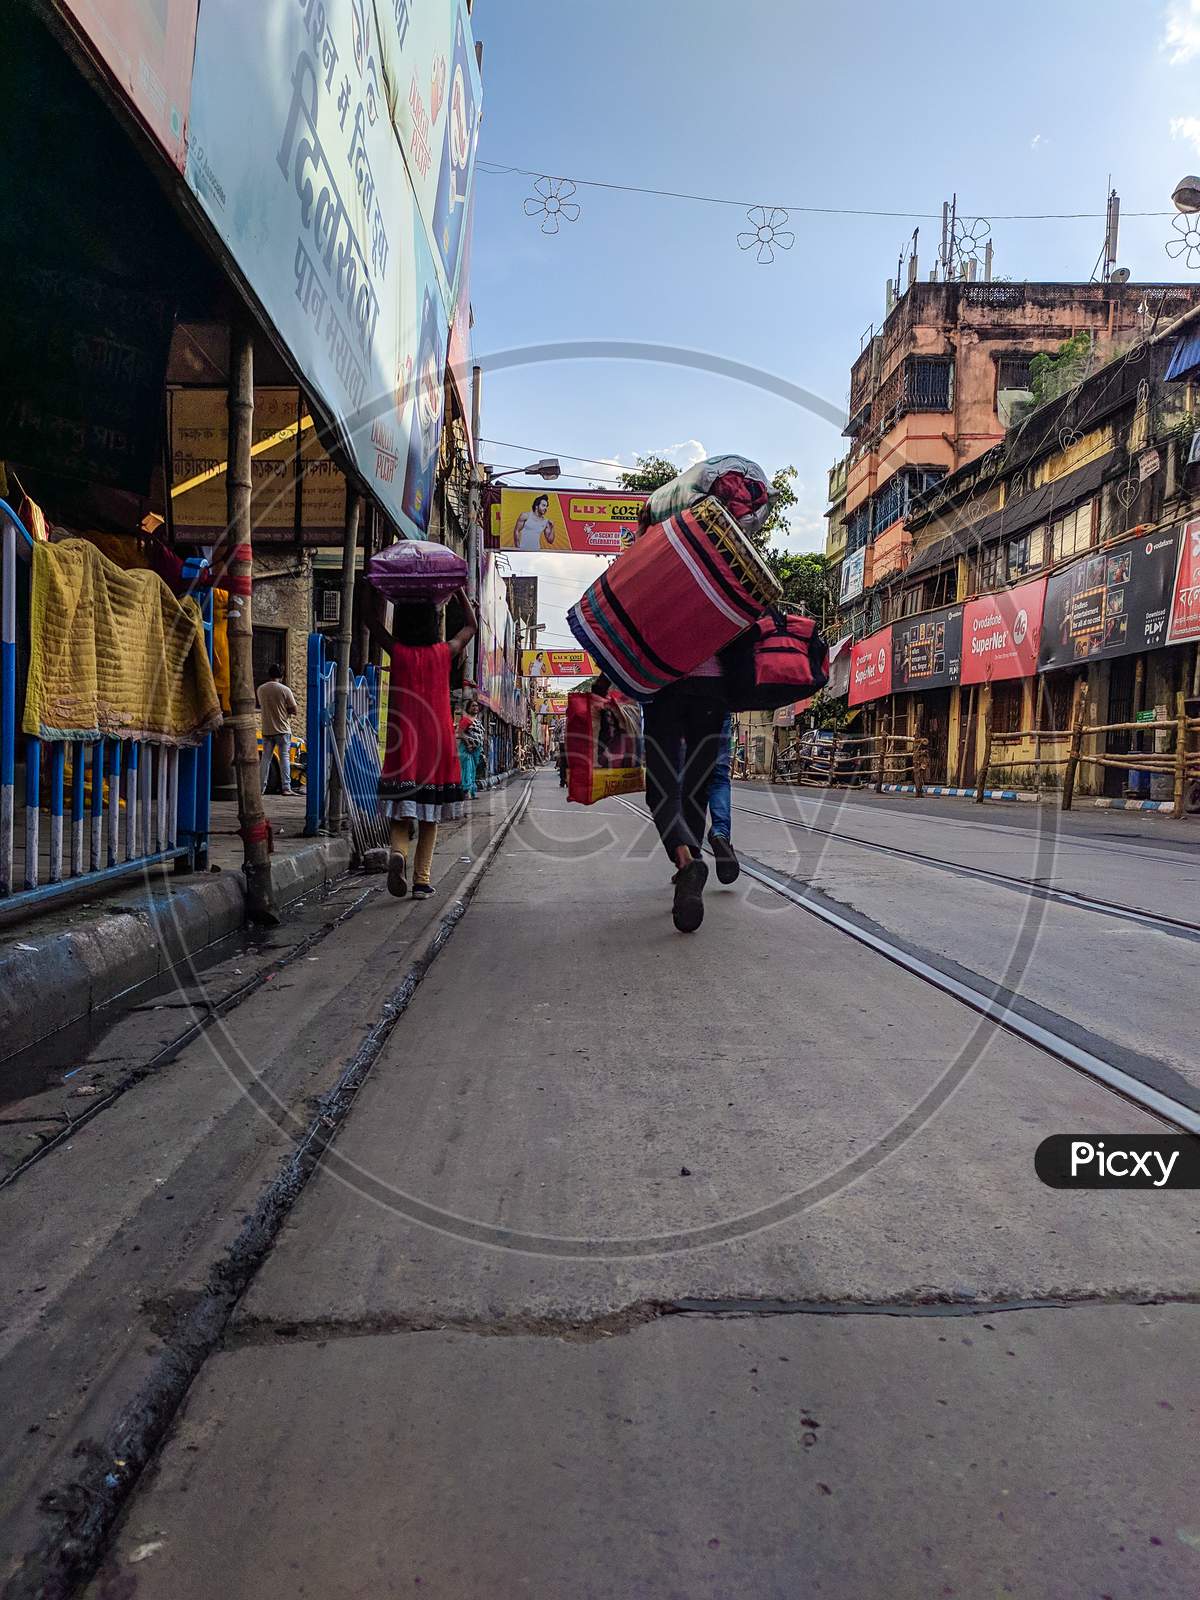 People Walking On Street Carrying Luggage on Head